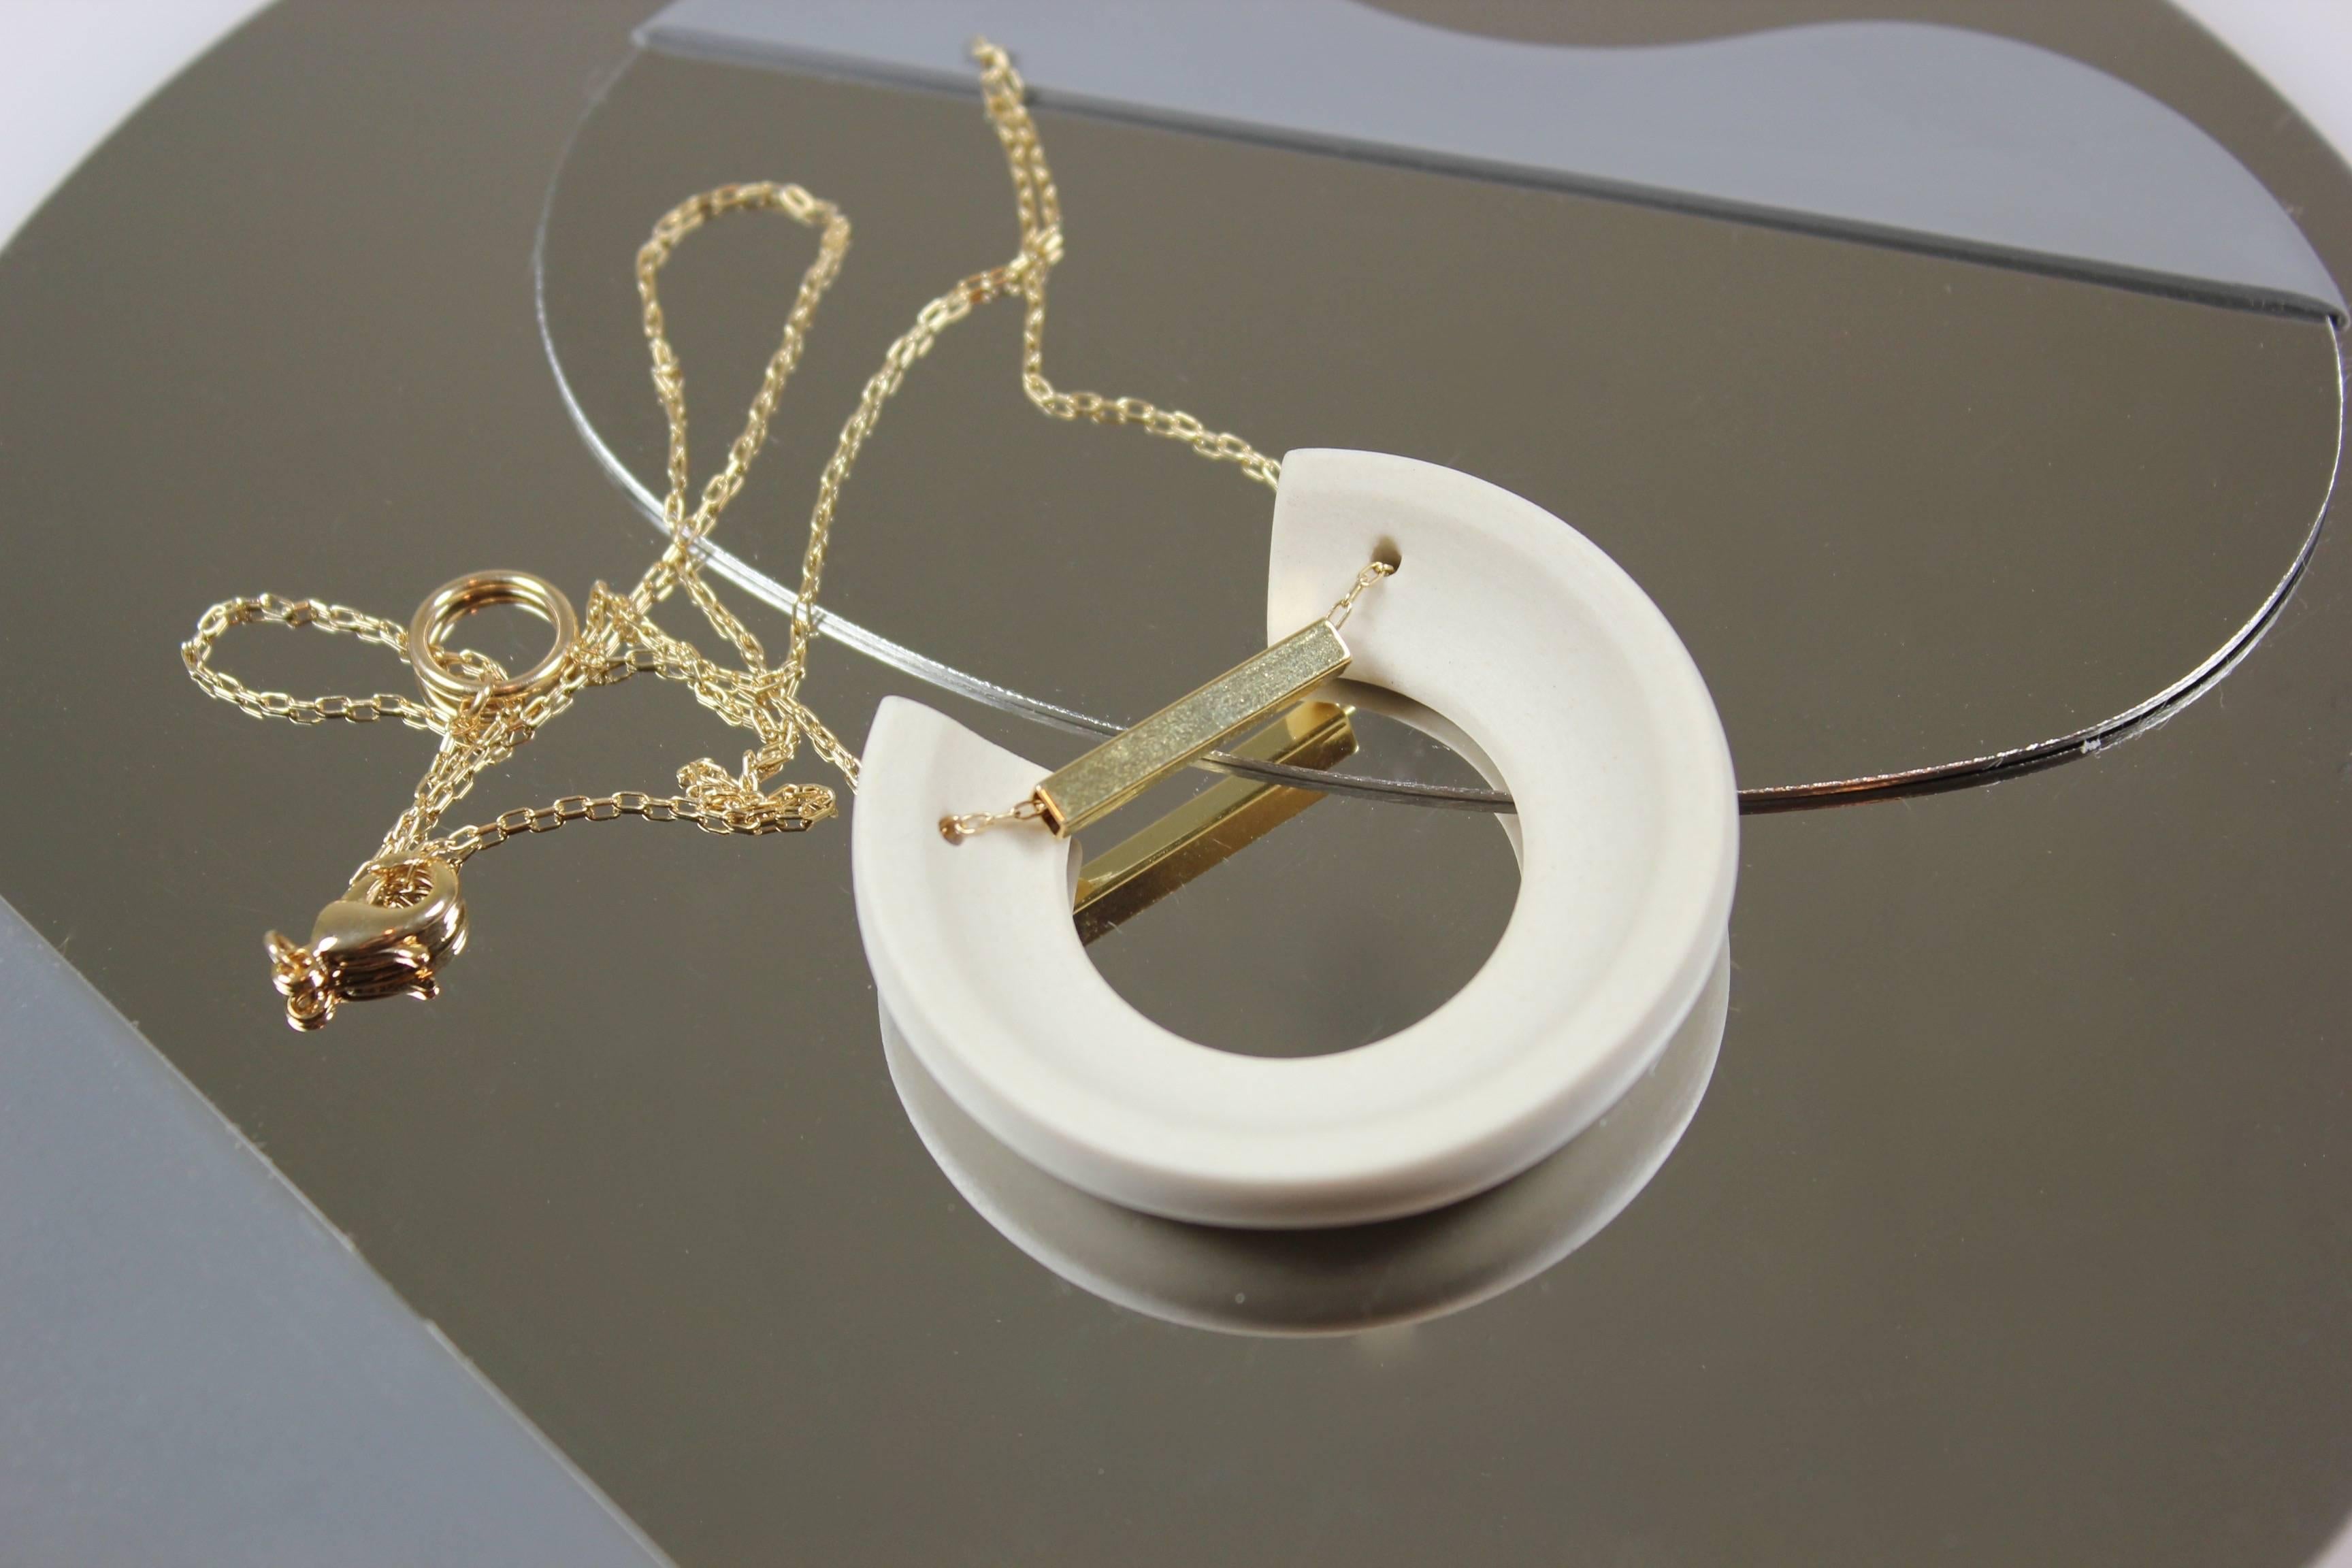 Necklace #9 (Pendant) - Sculpture by Colleen DeBoer